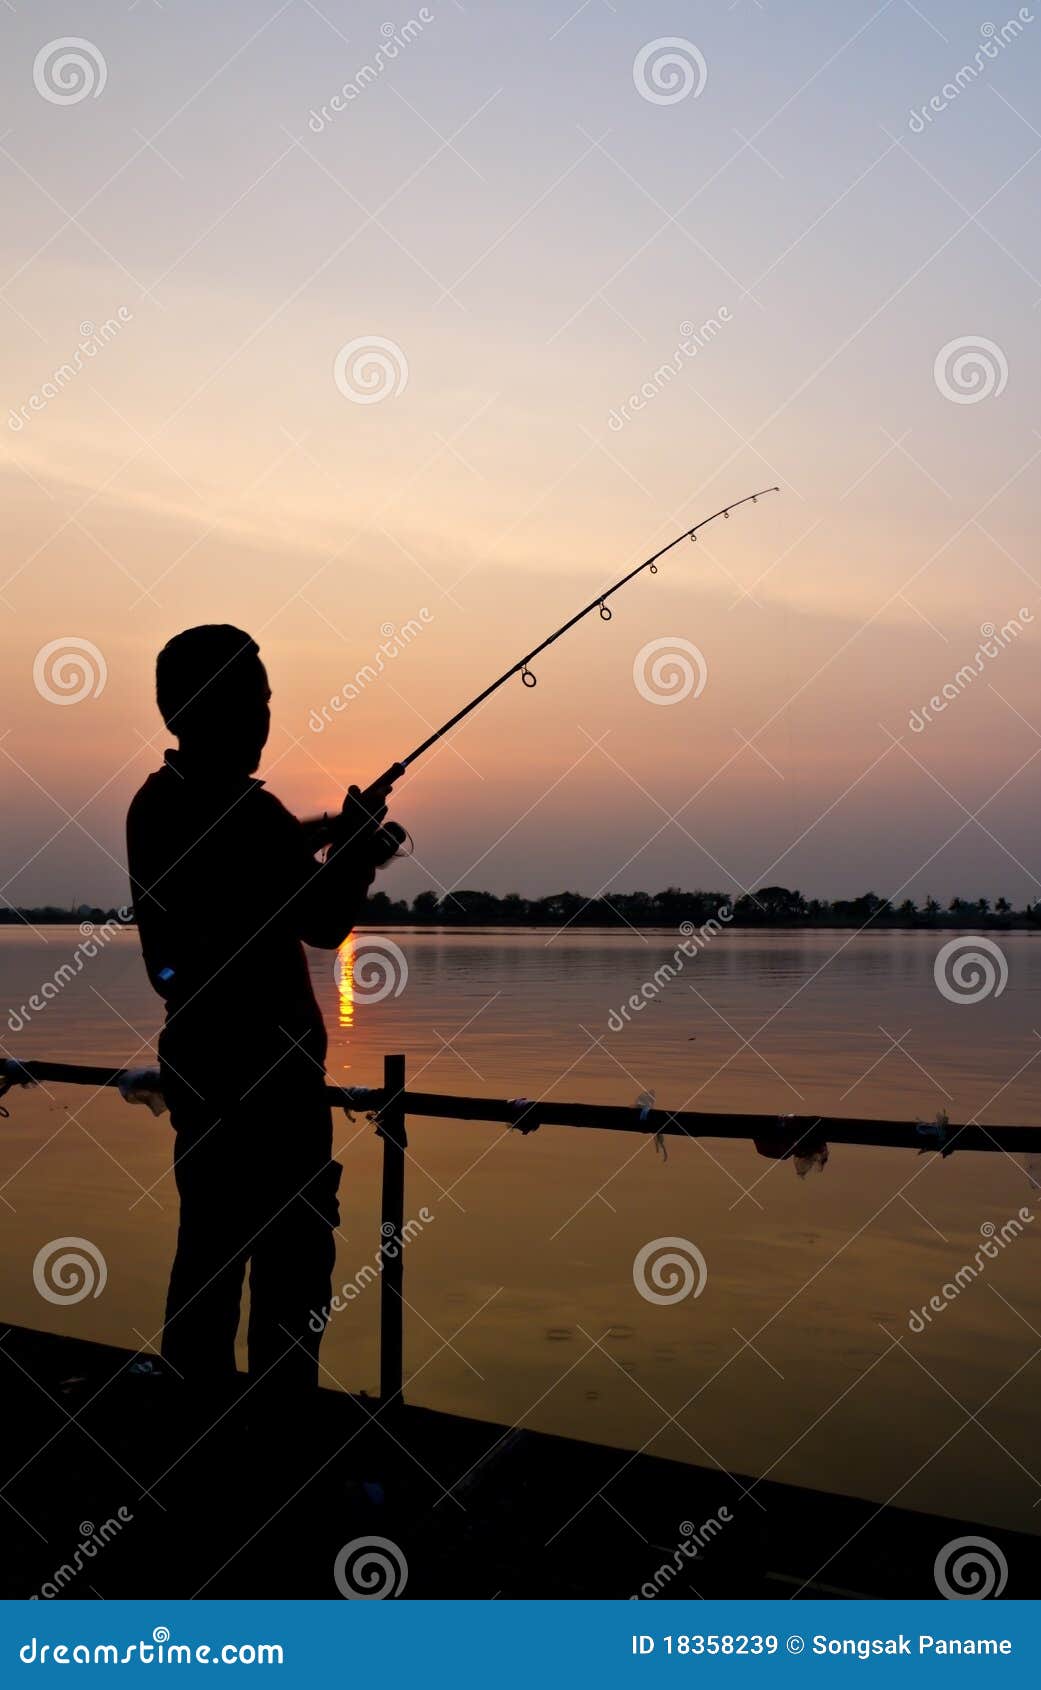 hook up fishing rod